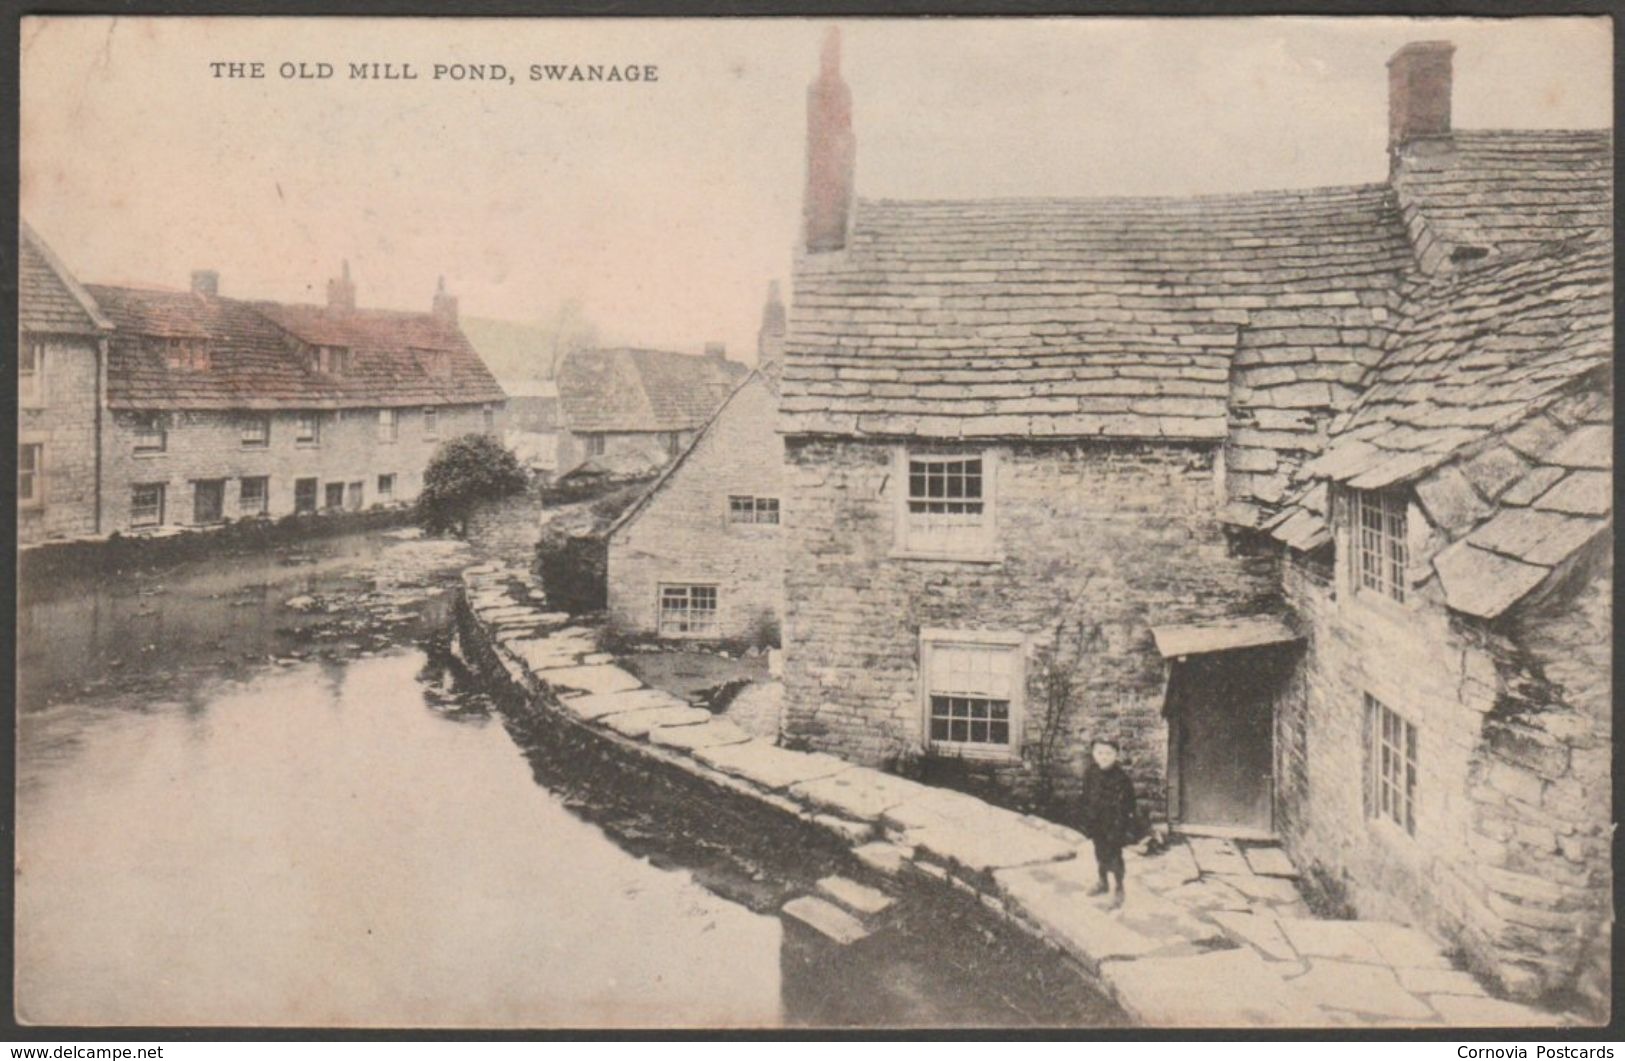 The Old Mill Pond, Swanage, Dorset, 1904 - Wykeham Postcard - Swanage